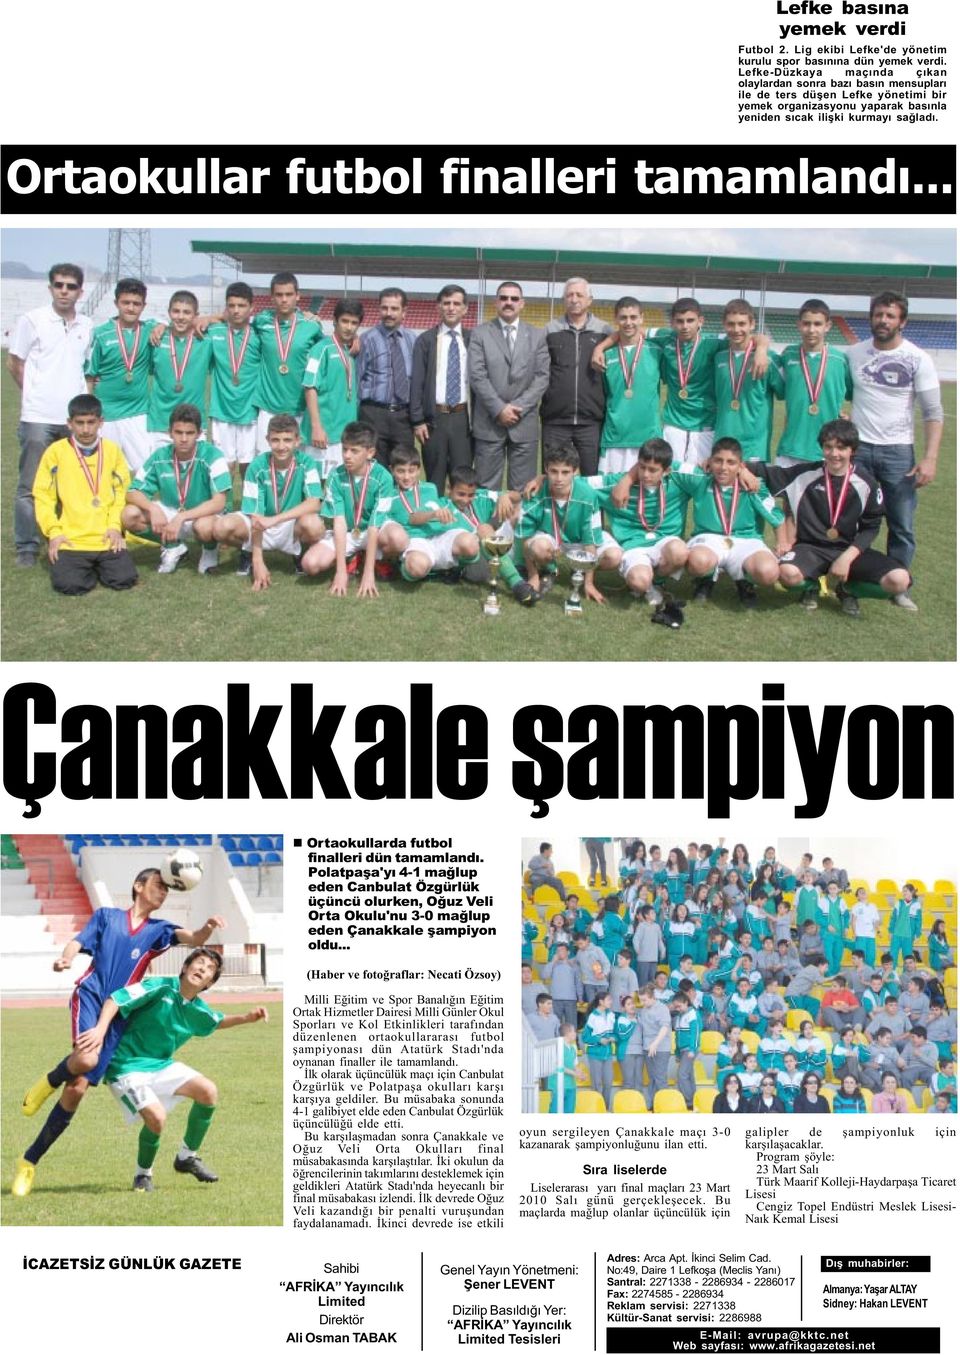 Ortaokullar futbol finalleri tamamlandý... Çanakkale þampiyon n Ortaokullarda futbol finalleri dün tamamlandý.